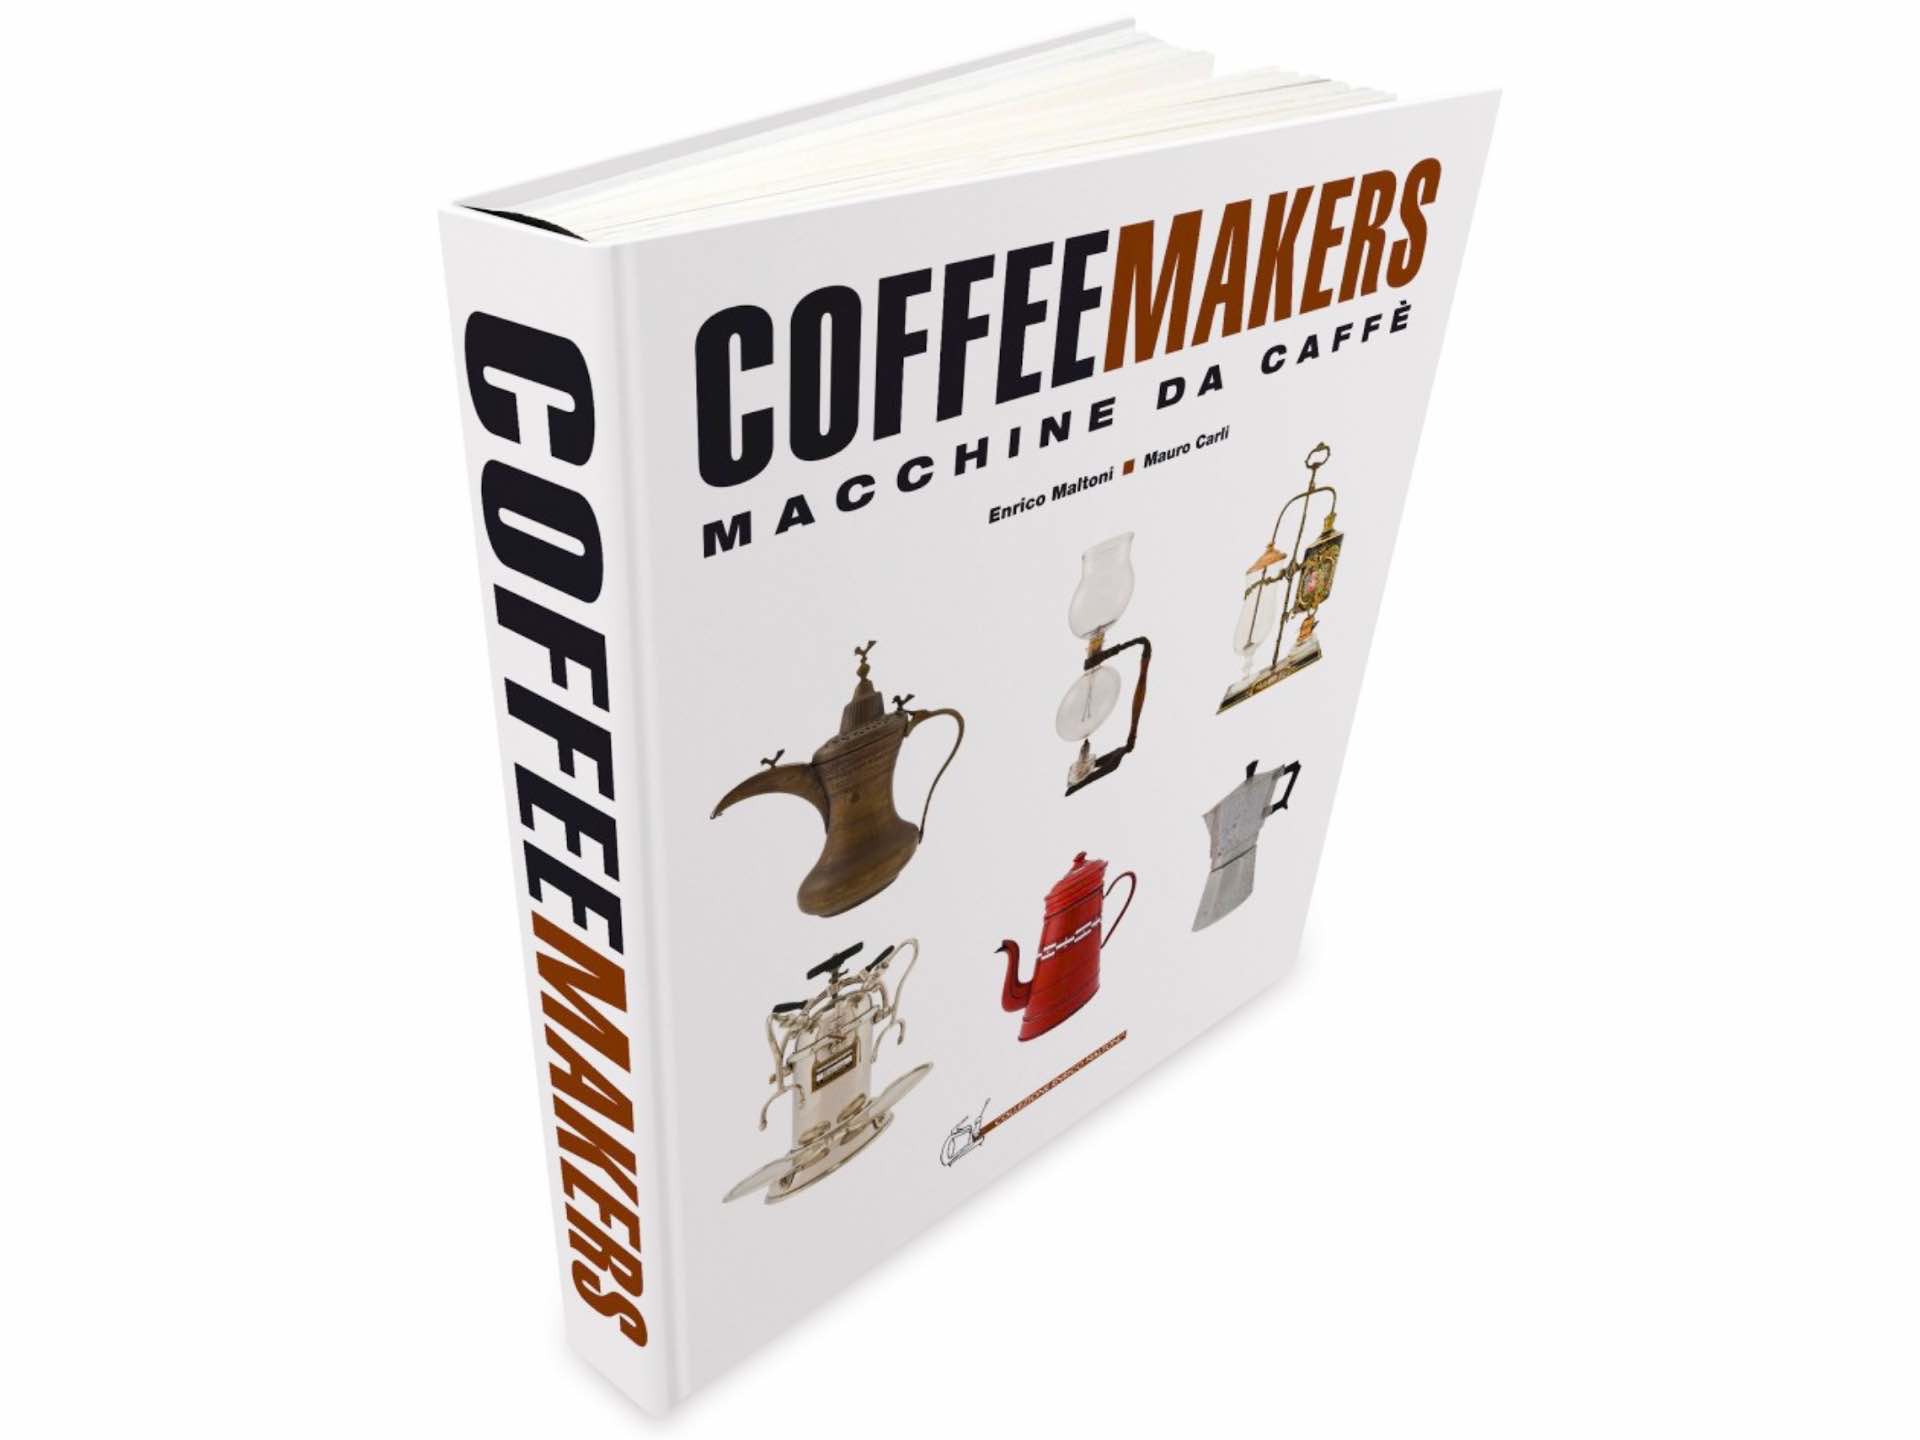 coffee-makers-book-by-enrico-maltoni-and-mauro-carli